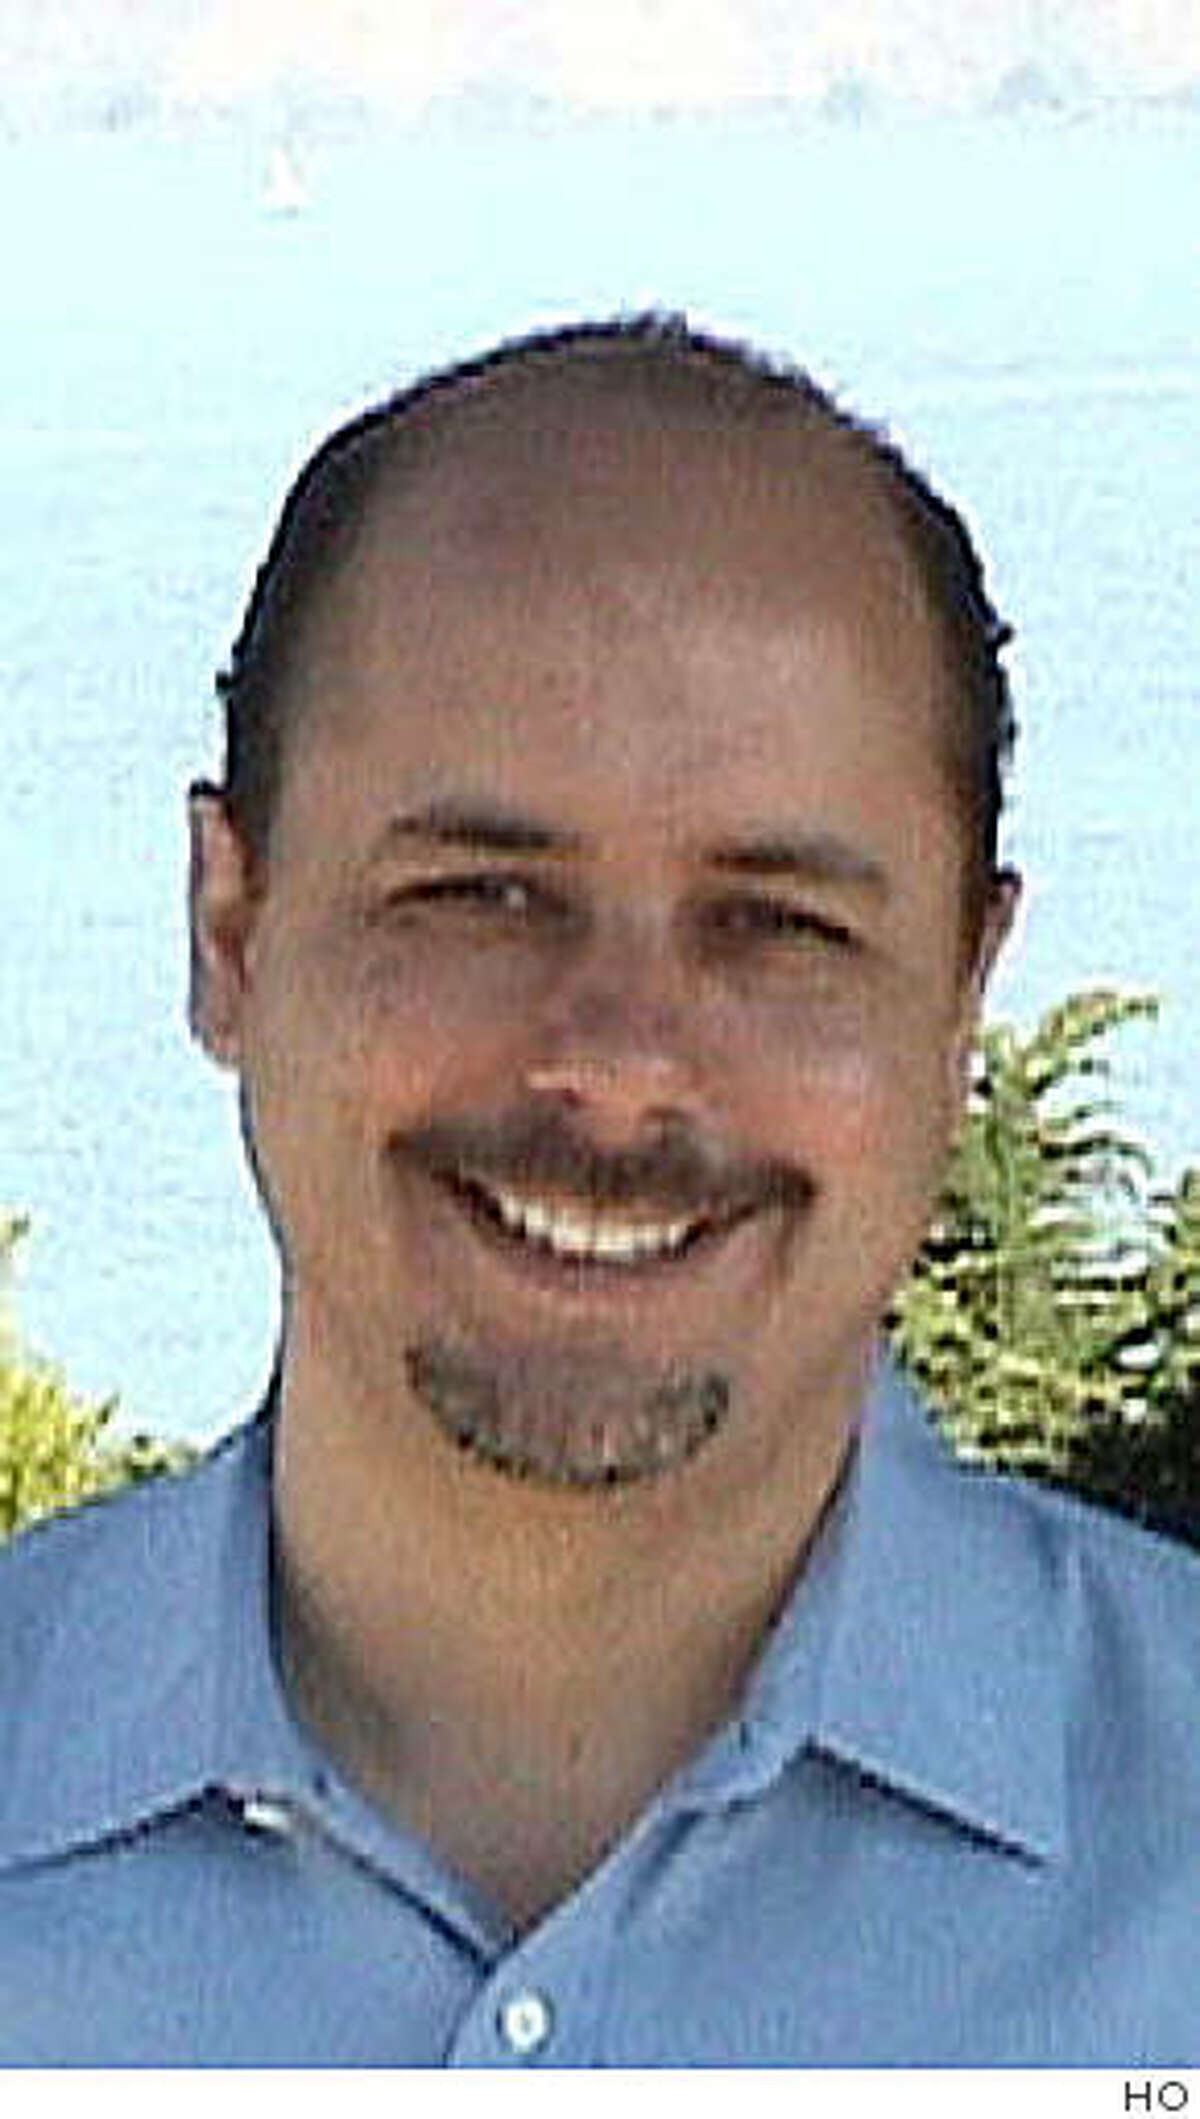 Mark Sanchez.JPG Mark Sanchez, S.F. school board member who is running for re-election in November. HO Ran on: 10-22-2004 Calloway Ran on: 07-27-2006 Ran on: 07-27-2006